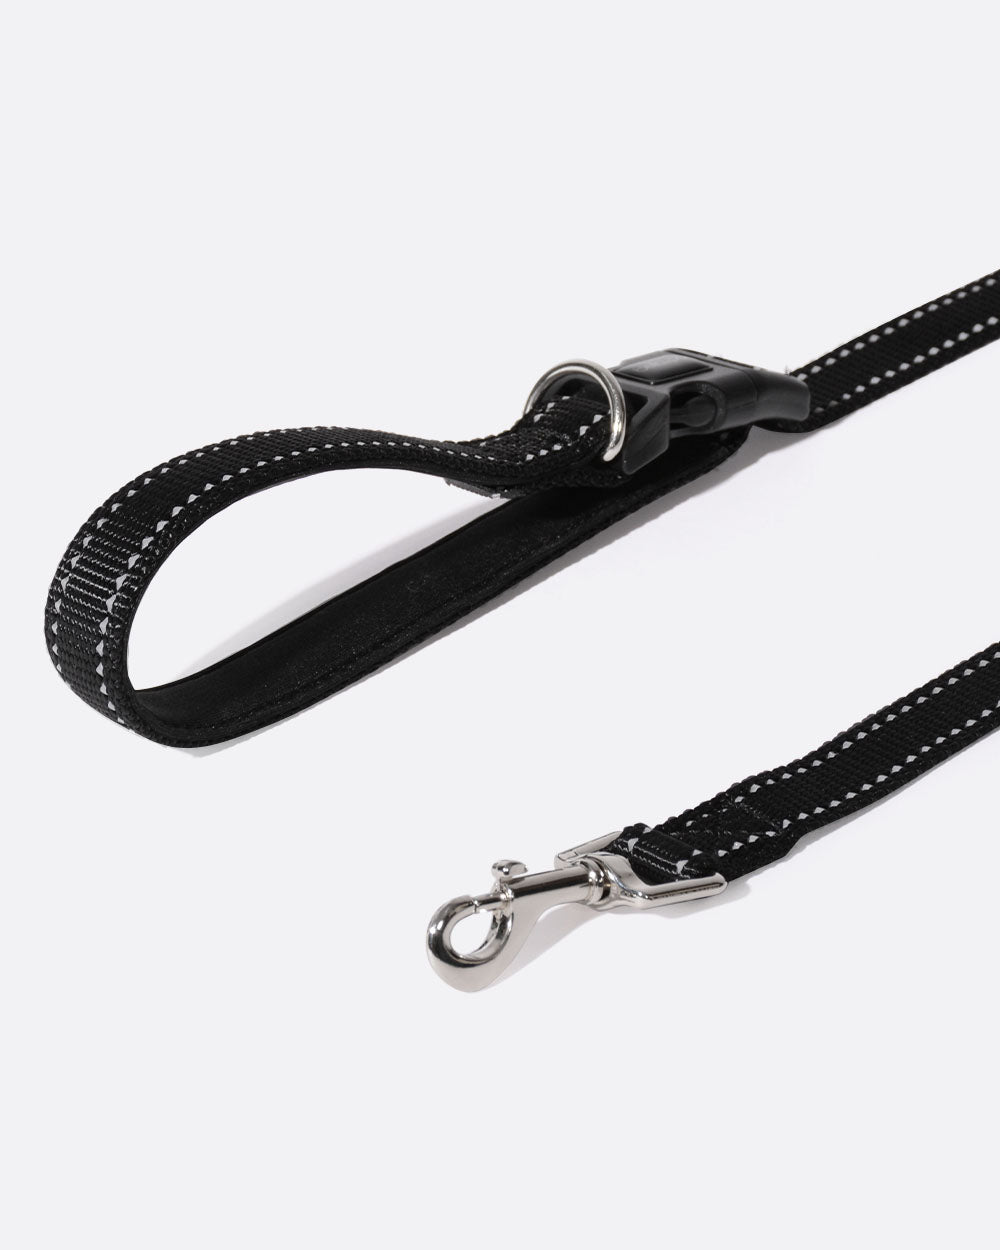 Hands-Free Multifunctional Dog Leash - Classic Black